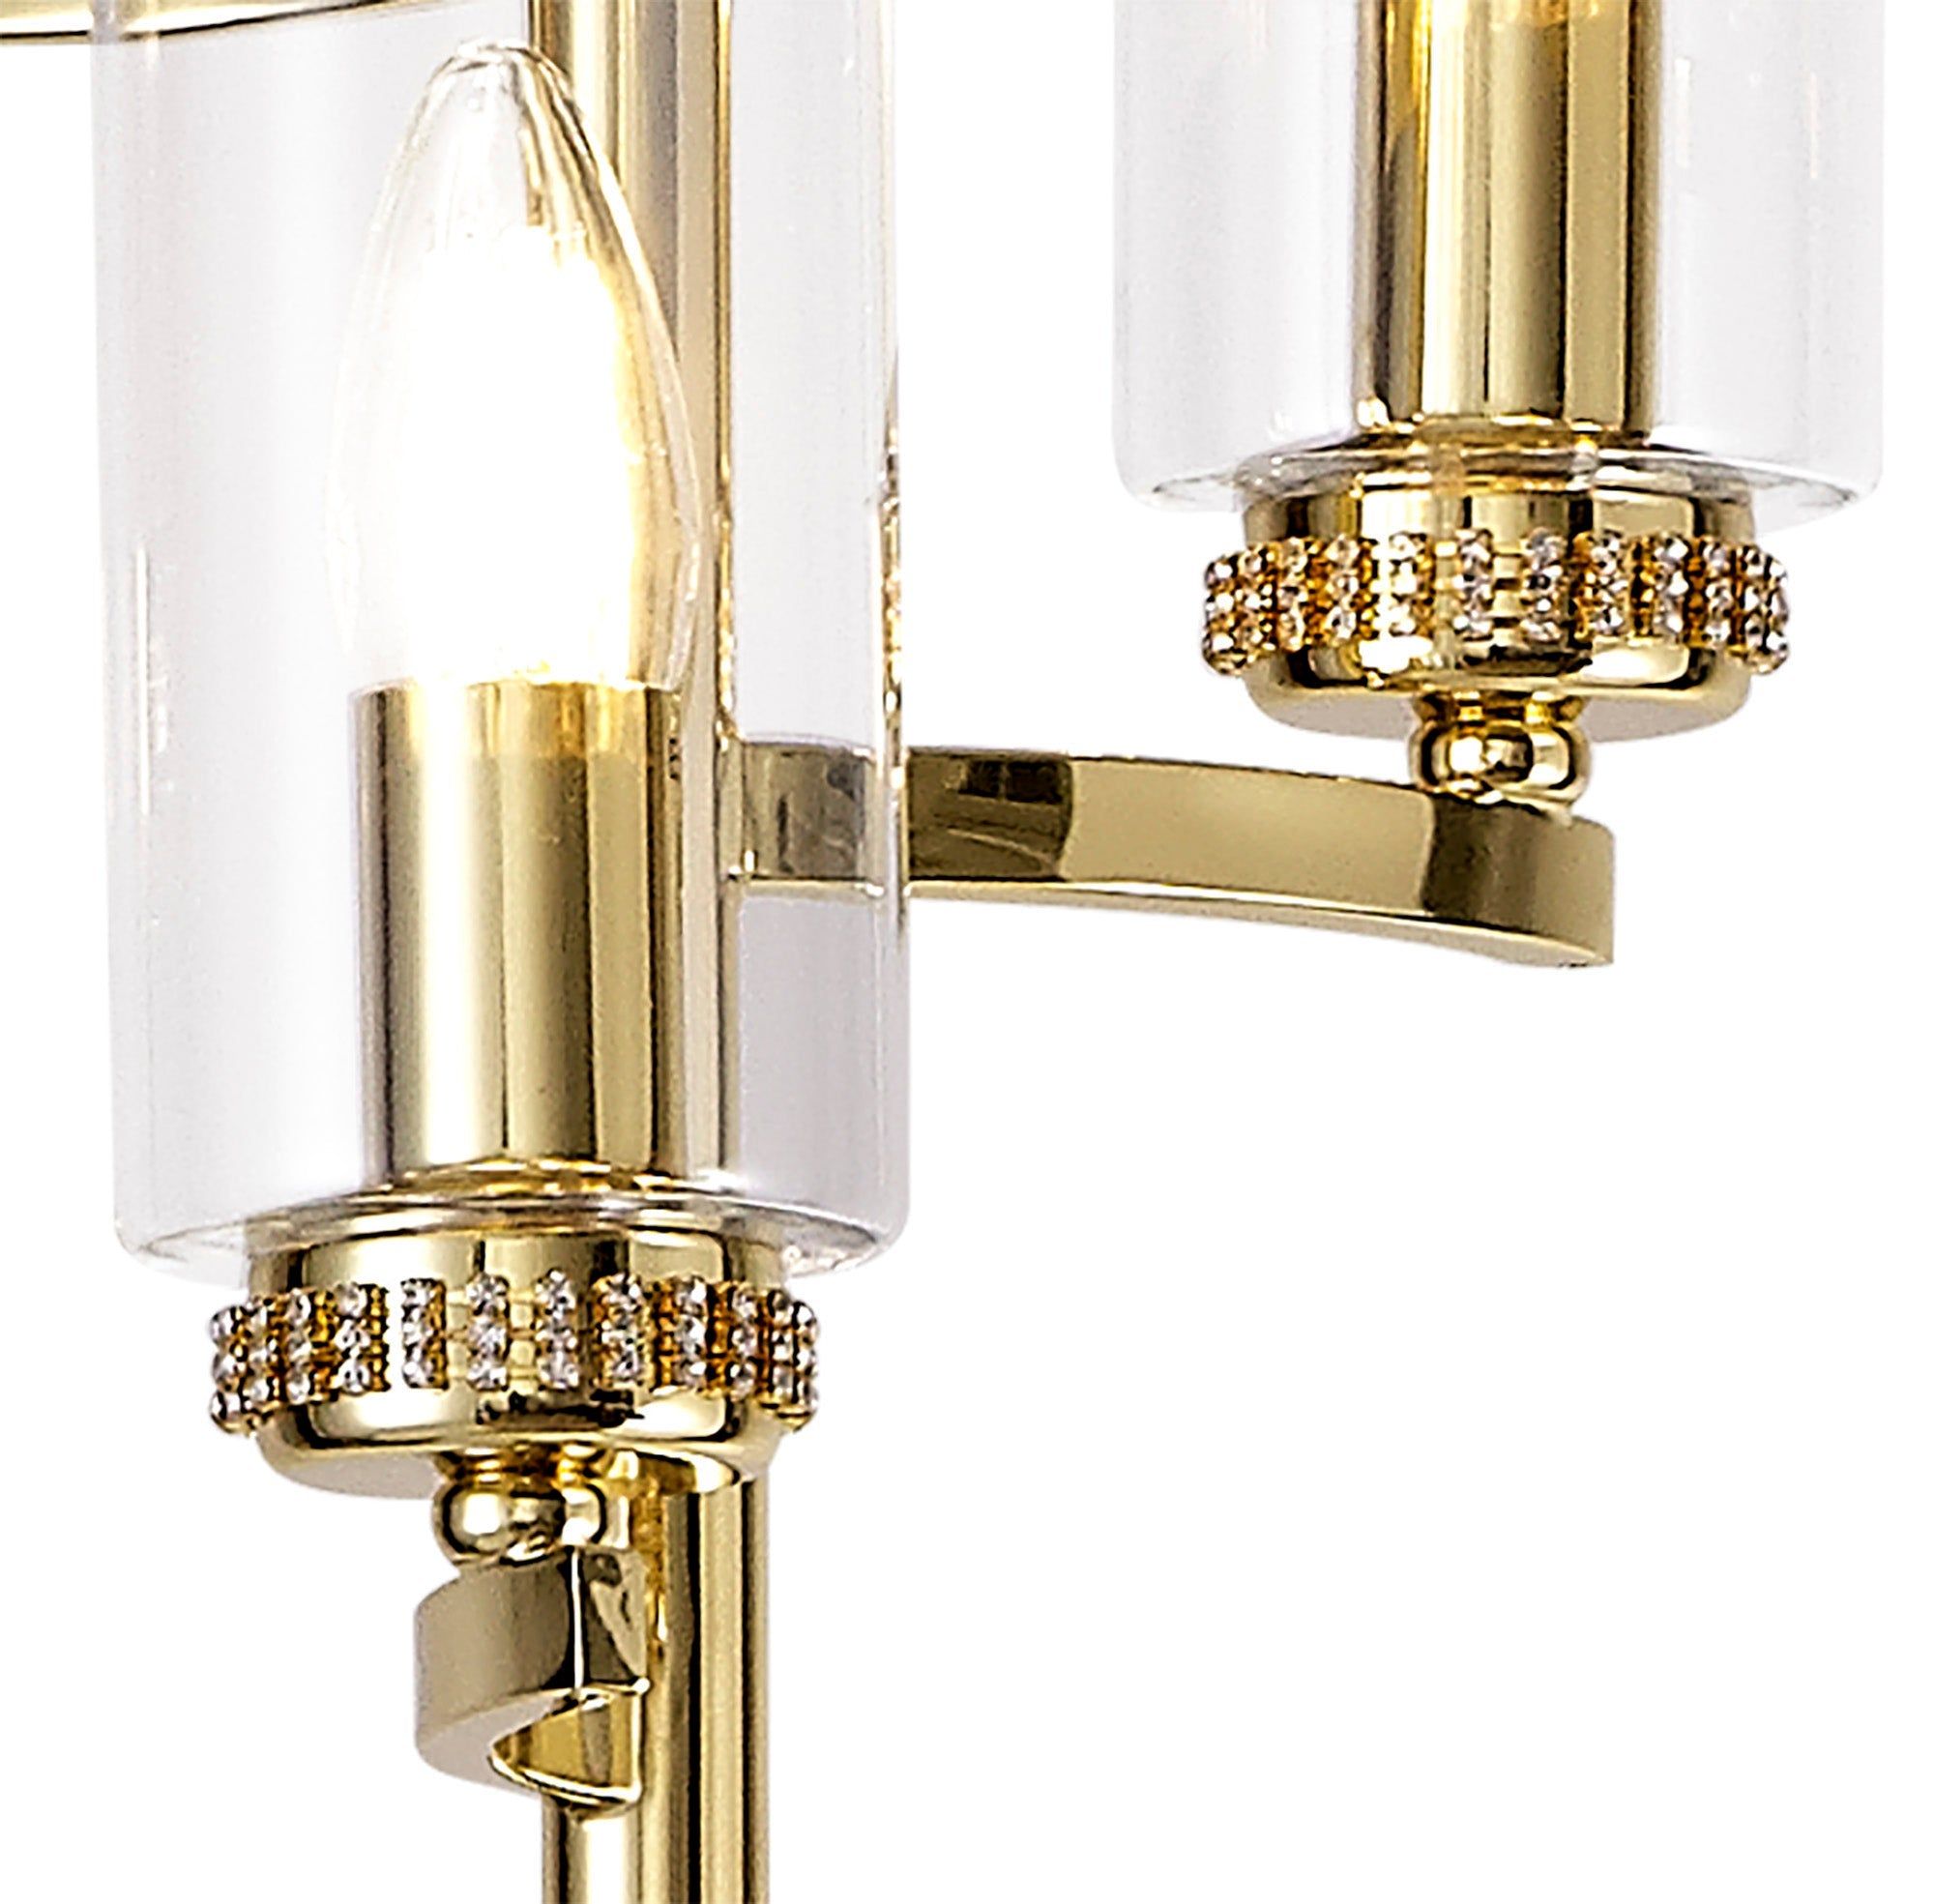 Deck Floor Lamp, 3 x E14, Antique Brass, Polished Gold, Polished Nickel